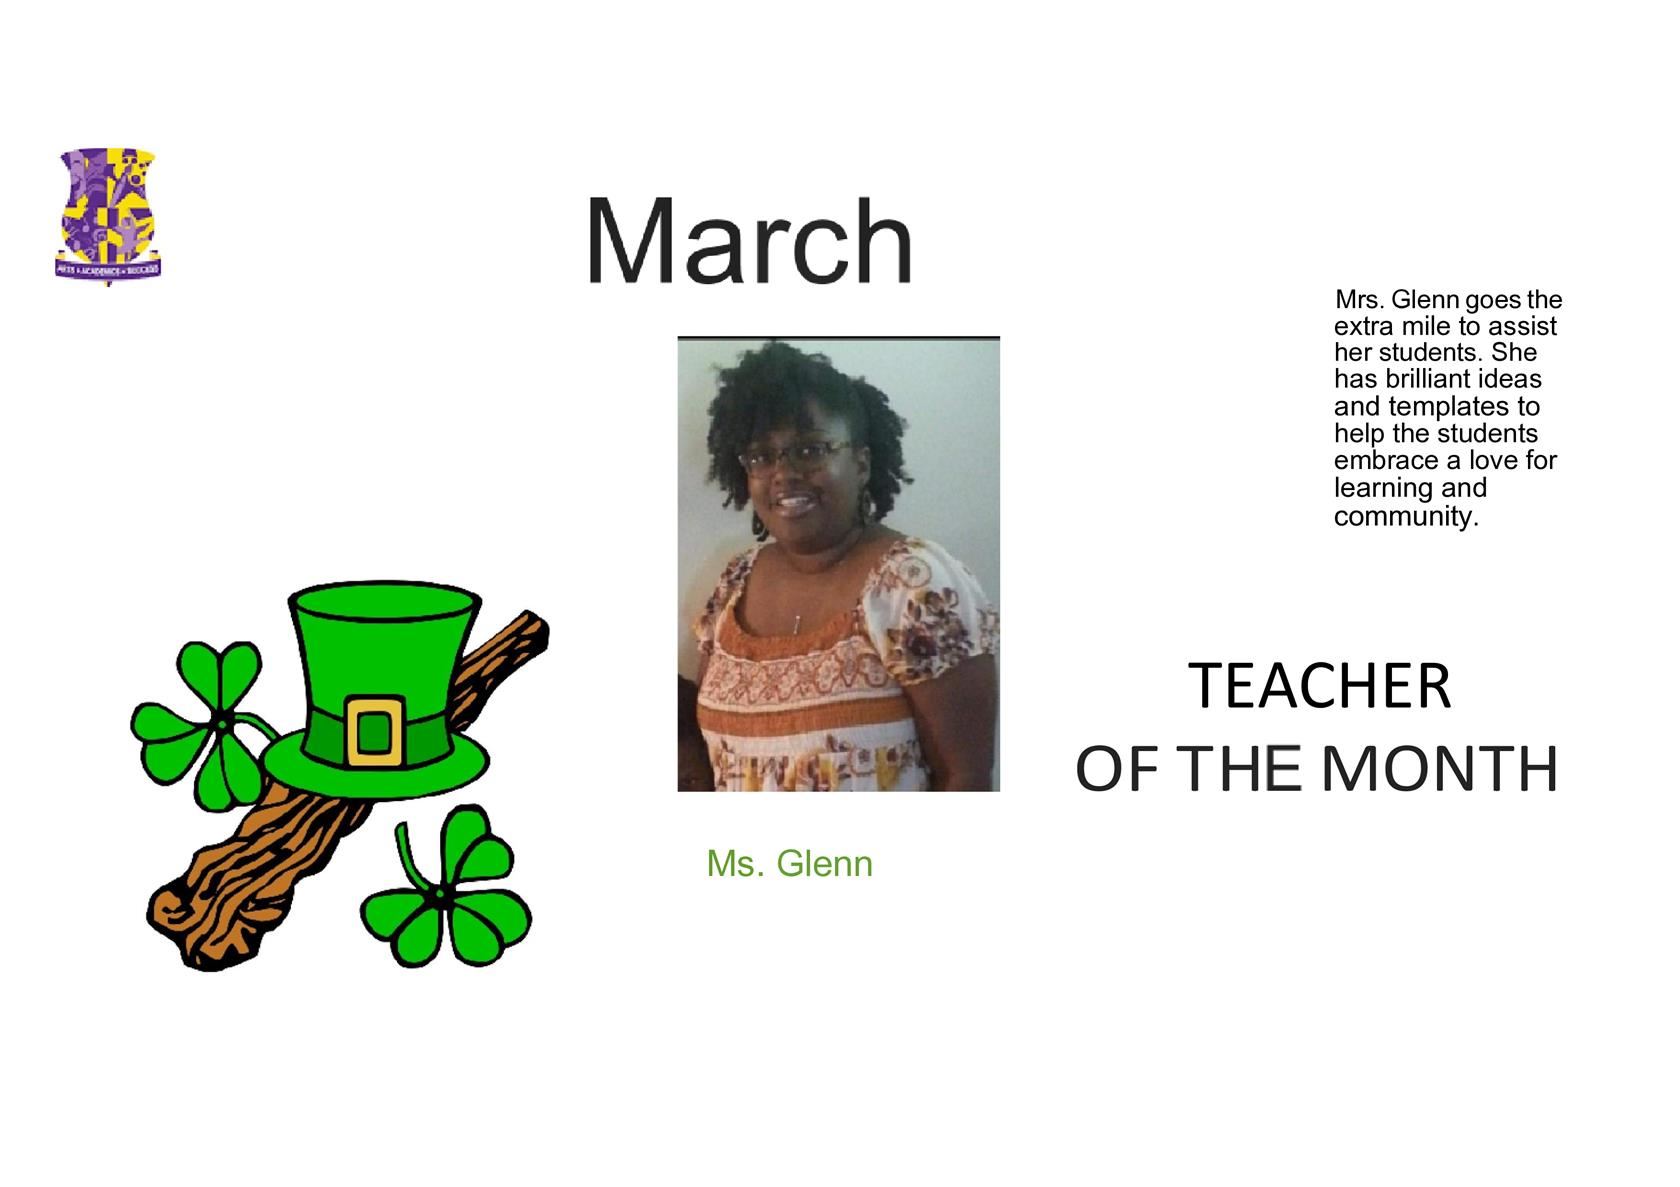  Congrats to Mrs. Glenn as UPCA's Teacher of the Month